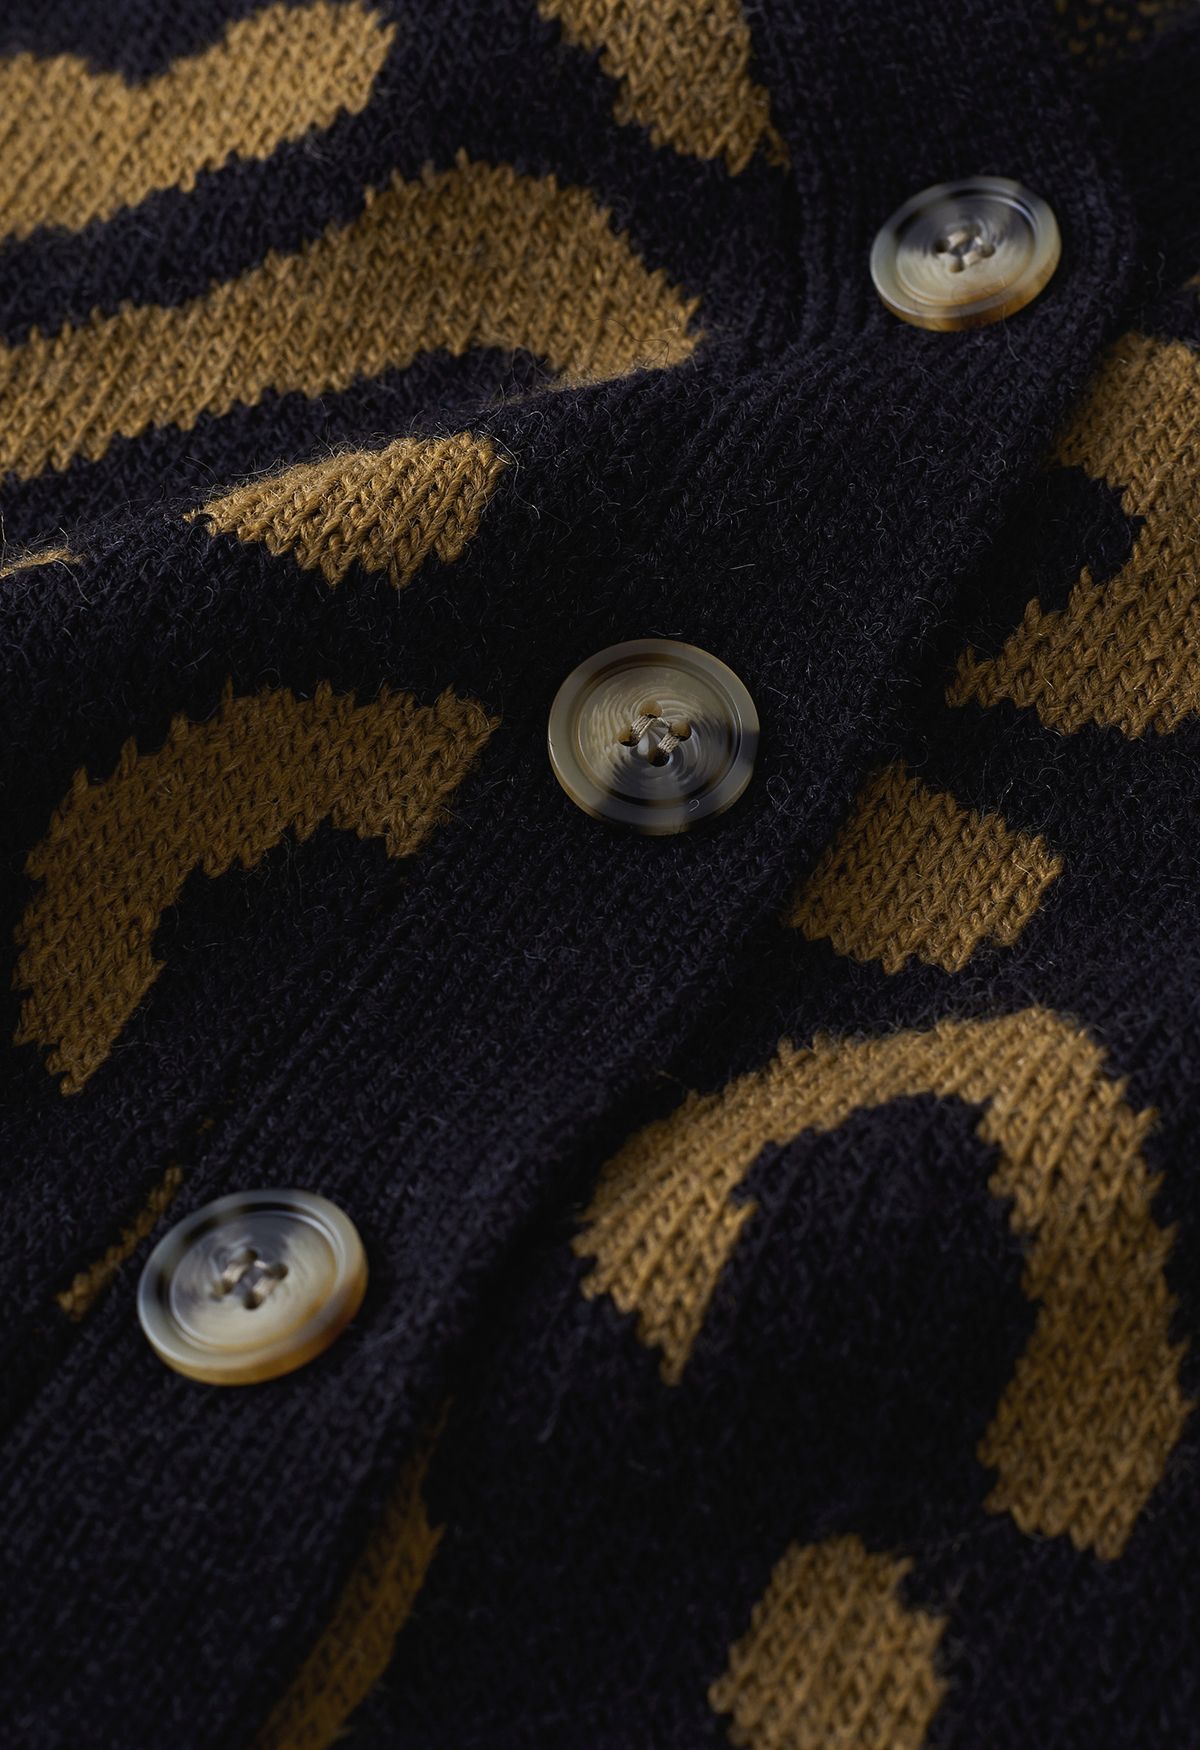 Leopard Print Button Down Knit Cardigan